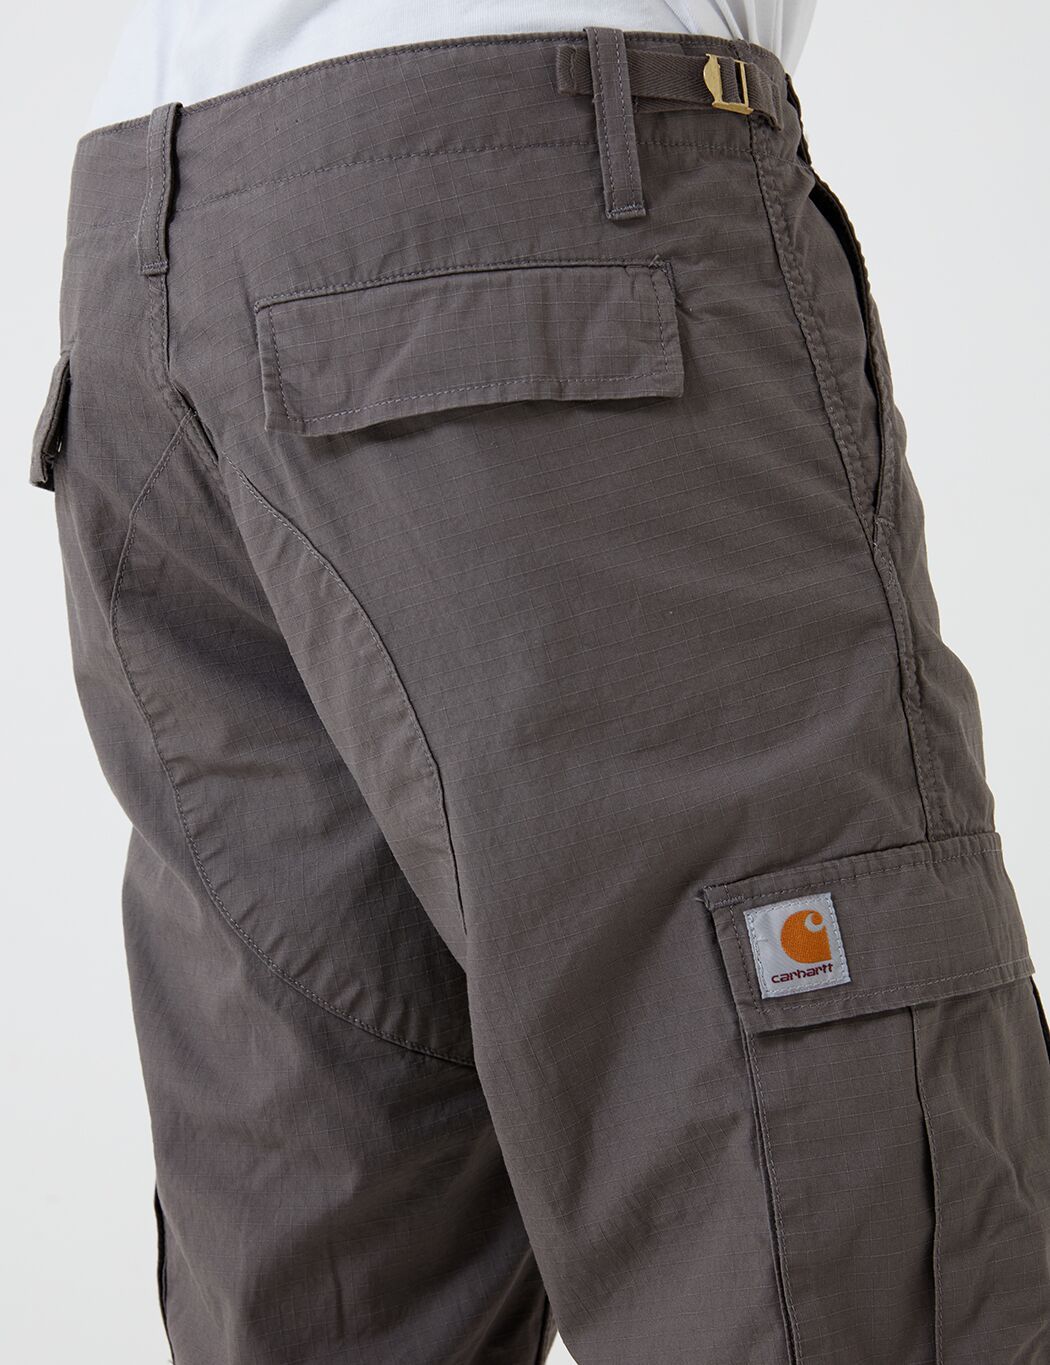 Carhartt WIP Aviation Pant Grey Gear Slim Fit Cargo Pants Air